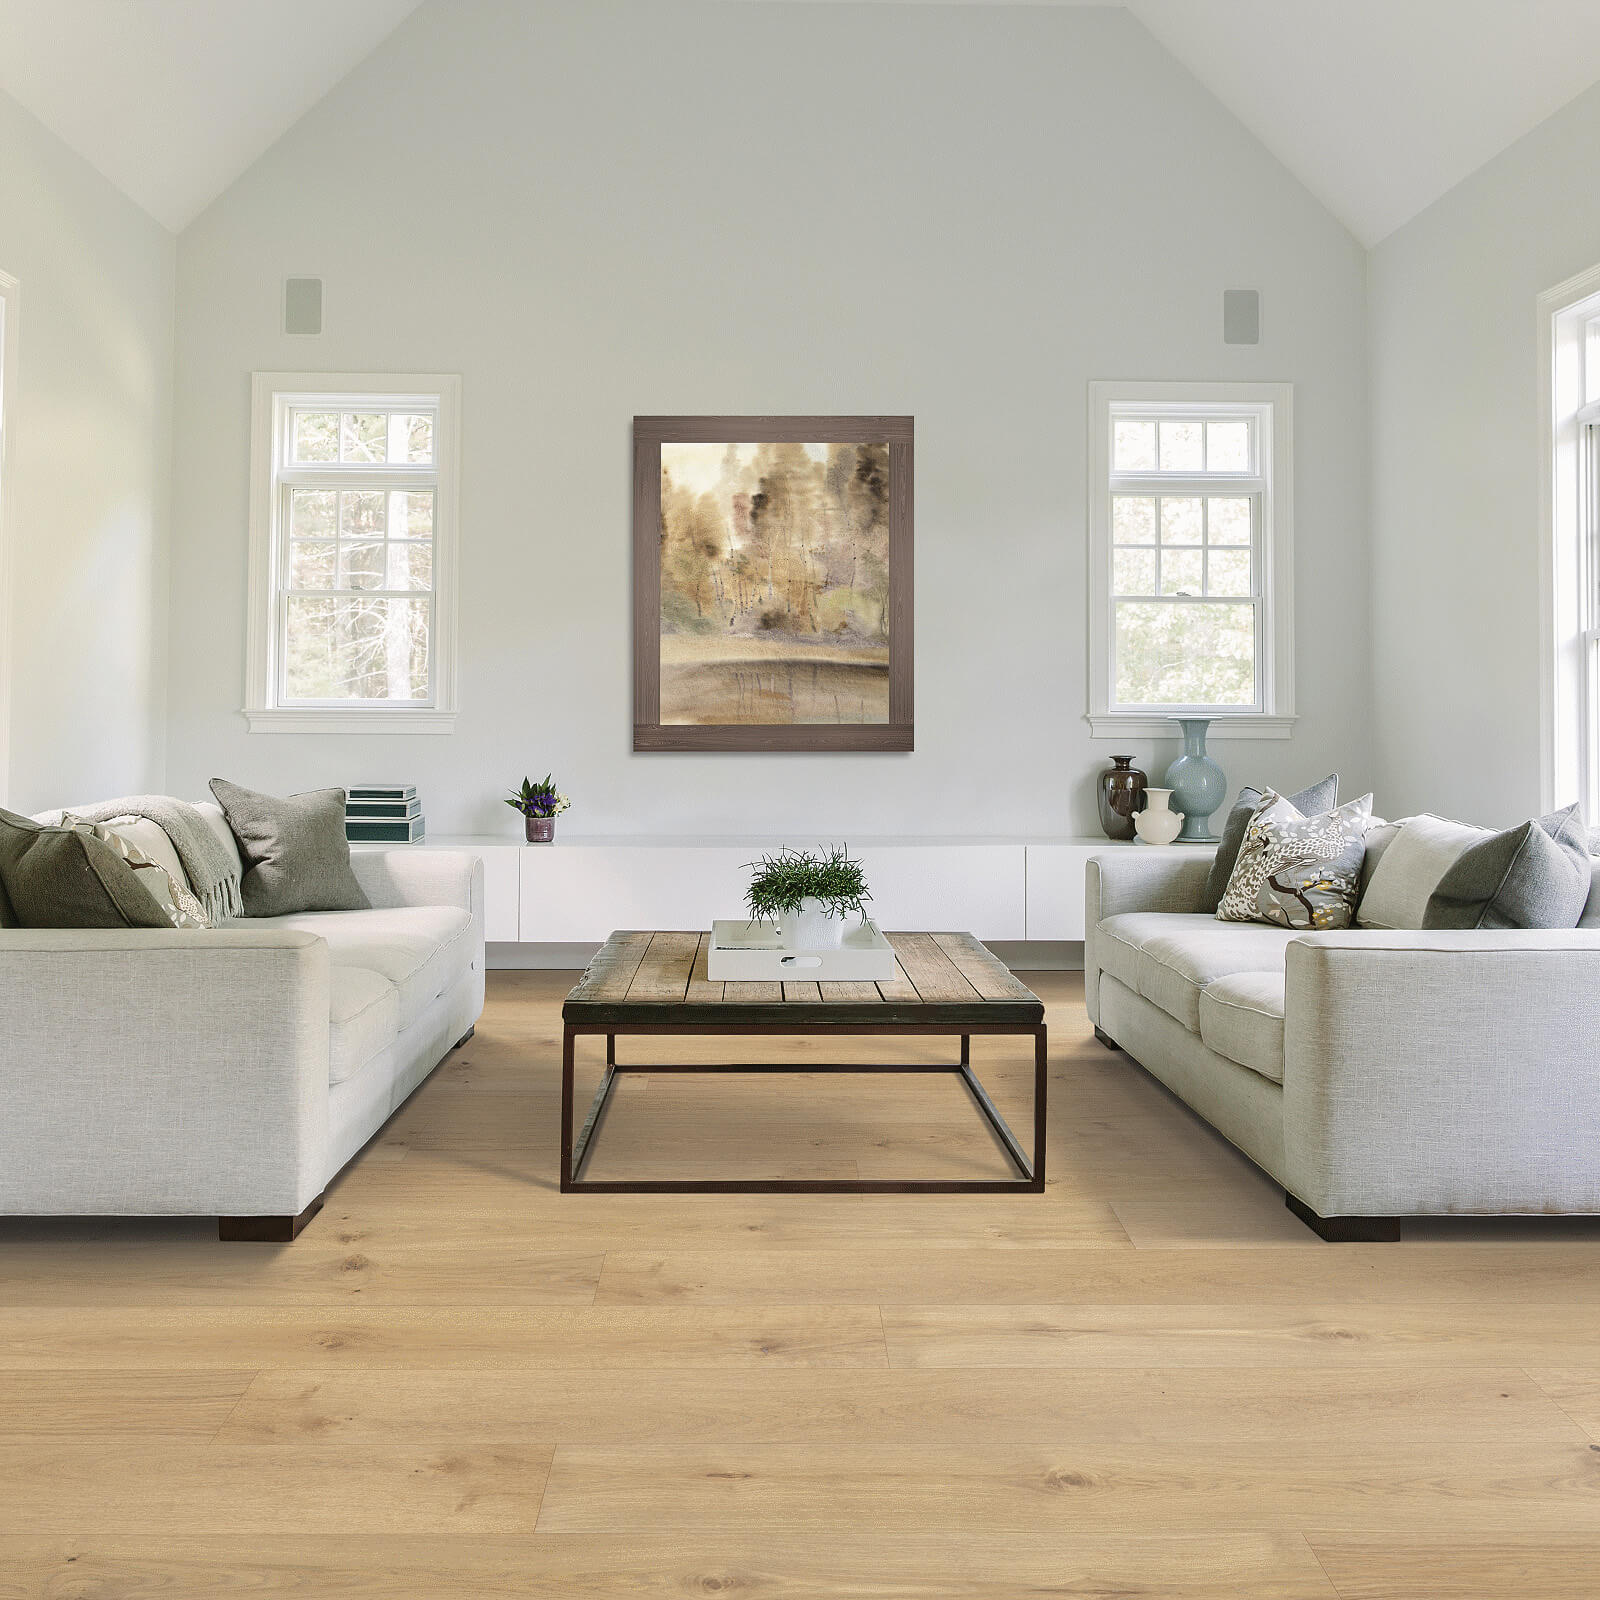 Hardwood in living room | Sterling Carpet and Flooring